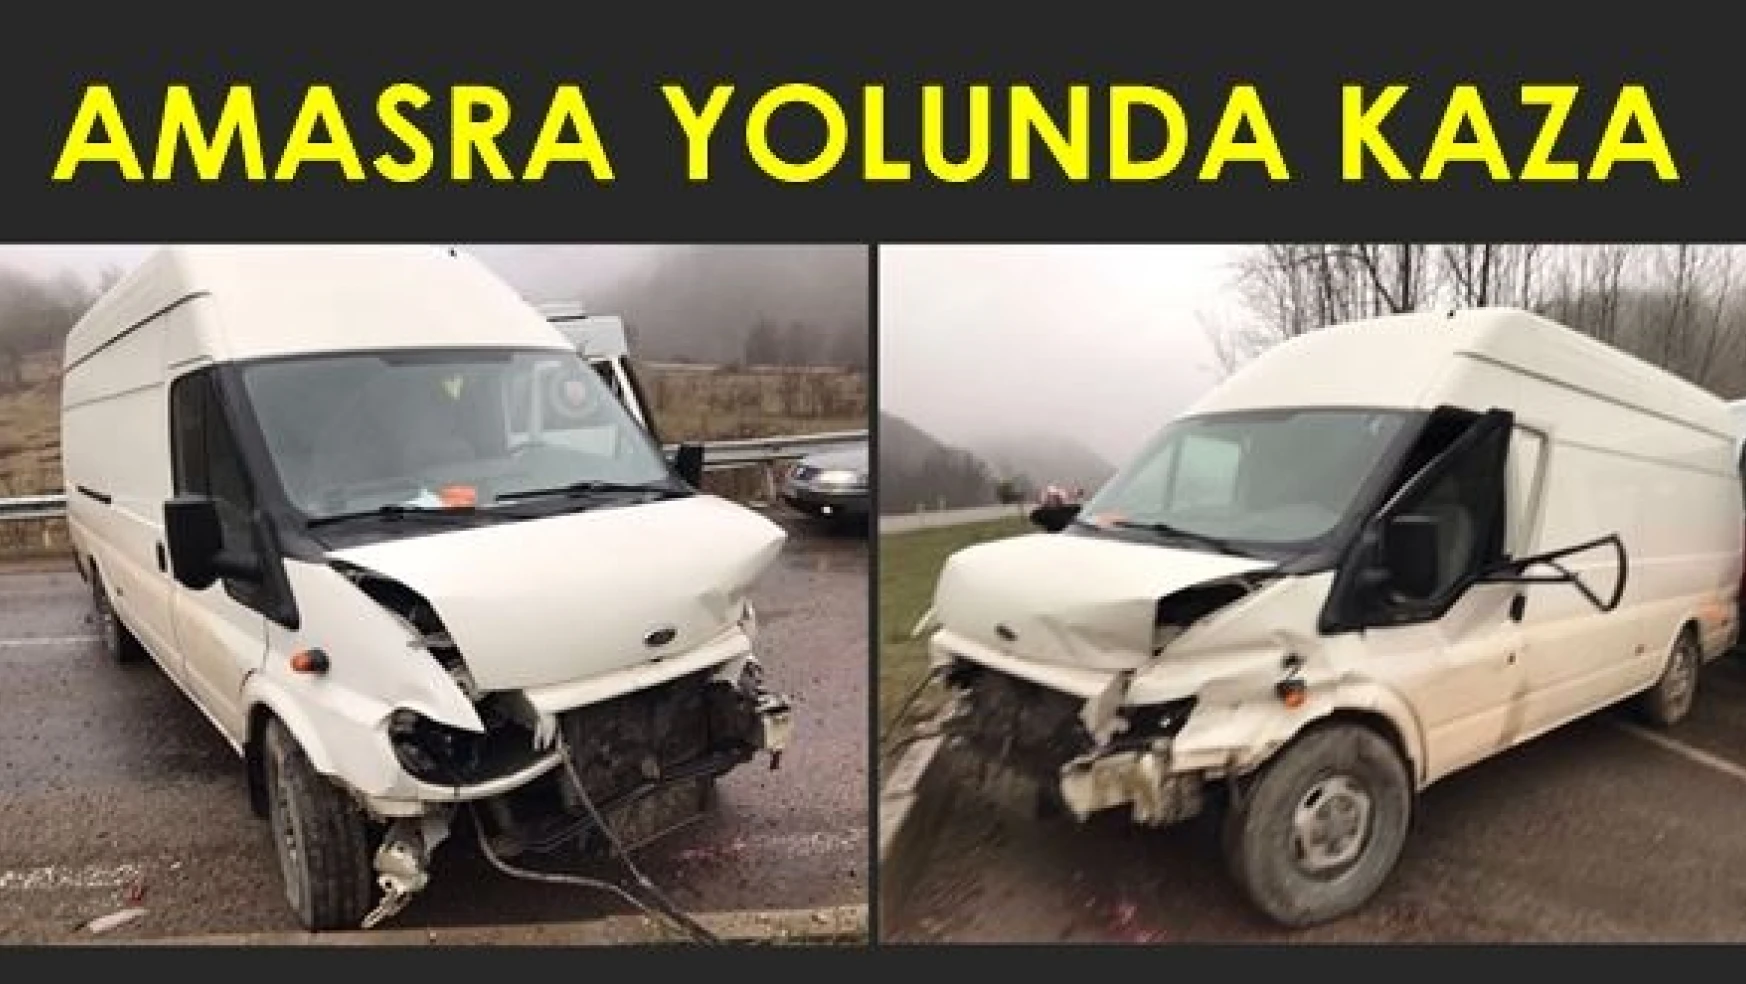 Amasra Yolunda Kaza, 1 yaralı